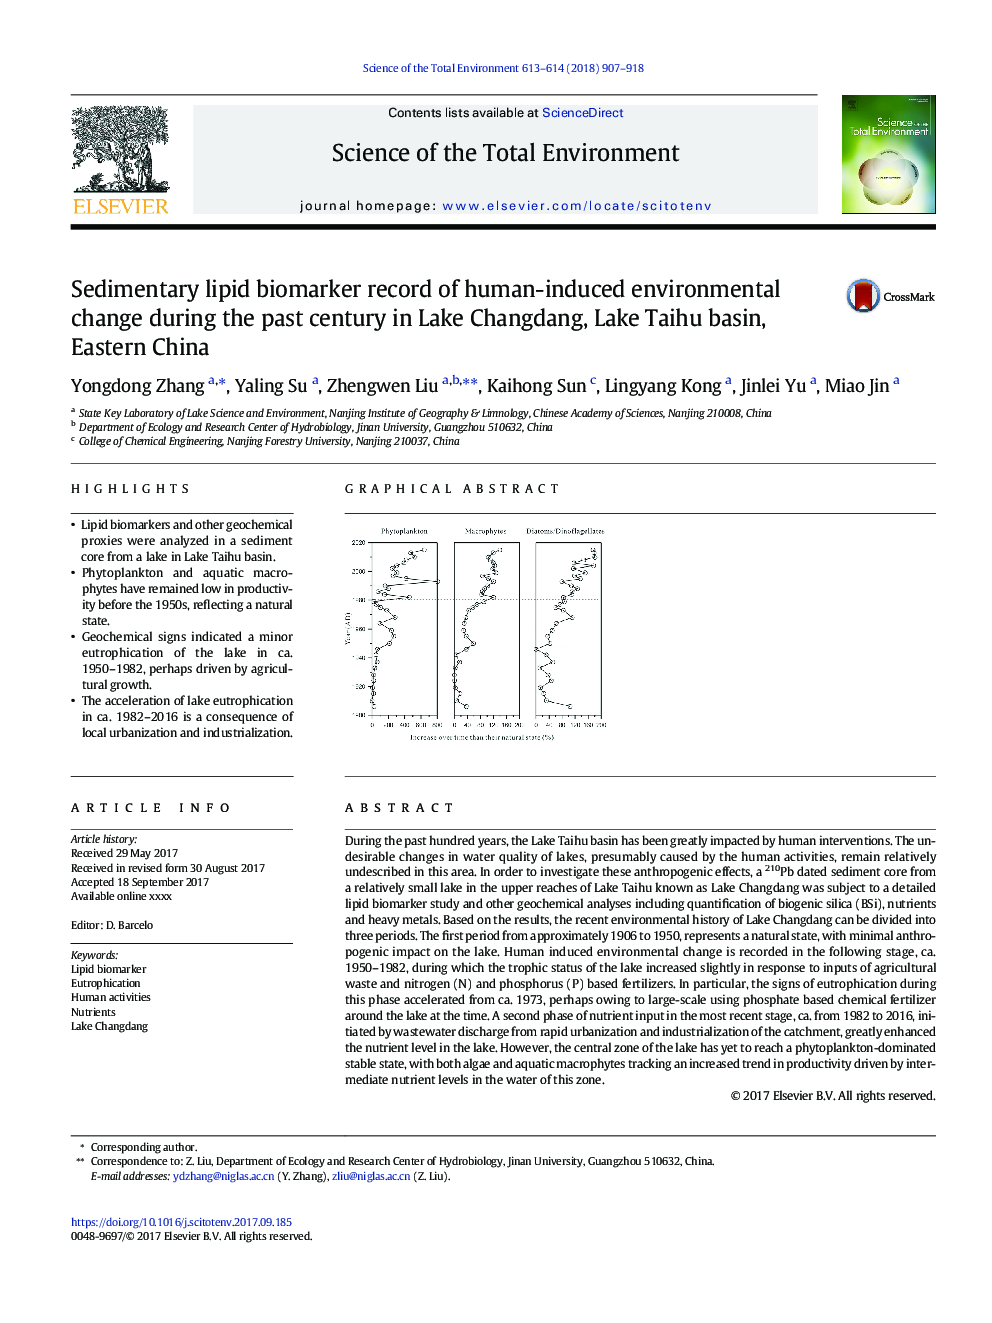 Sedimentary lipid biomarker record of human-induced environmental change during the past century in Lake Changdang, Lake Taihu basin, Eastern China